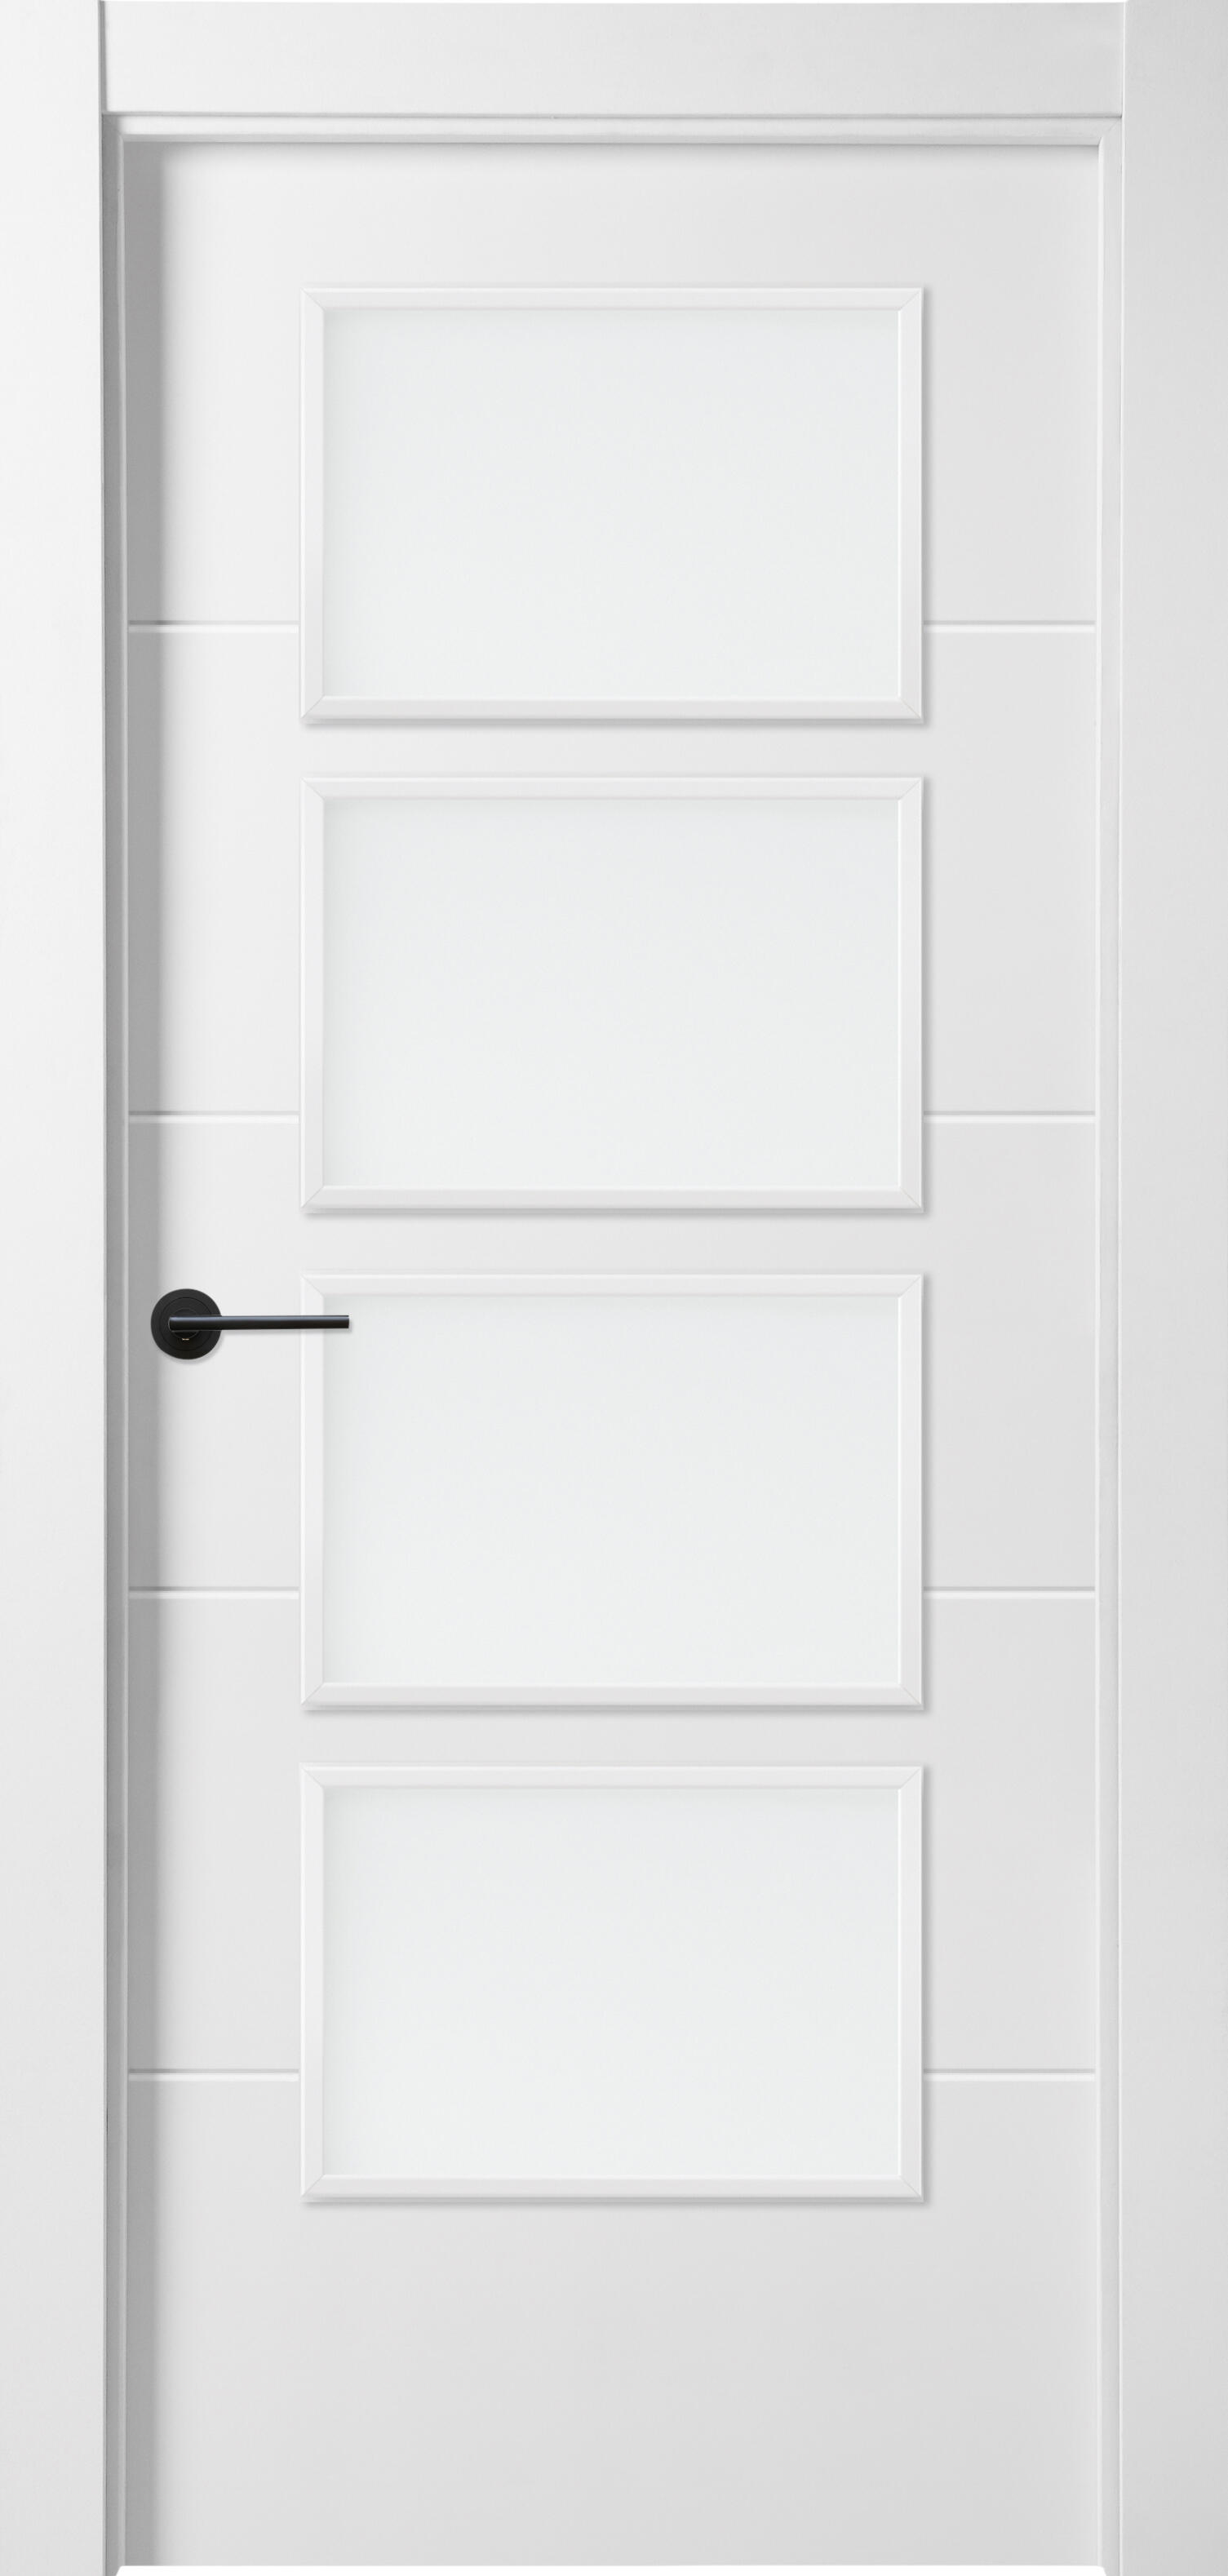 Puerta lucerna plus black blanco de apertura derecha con cristal de 11x82.5 cm